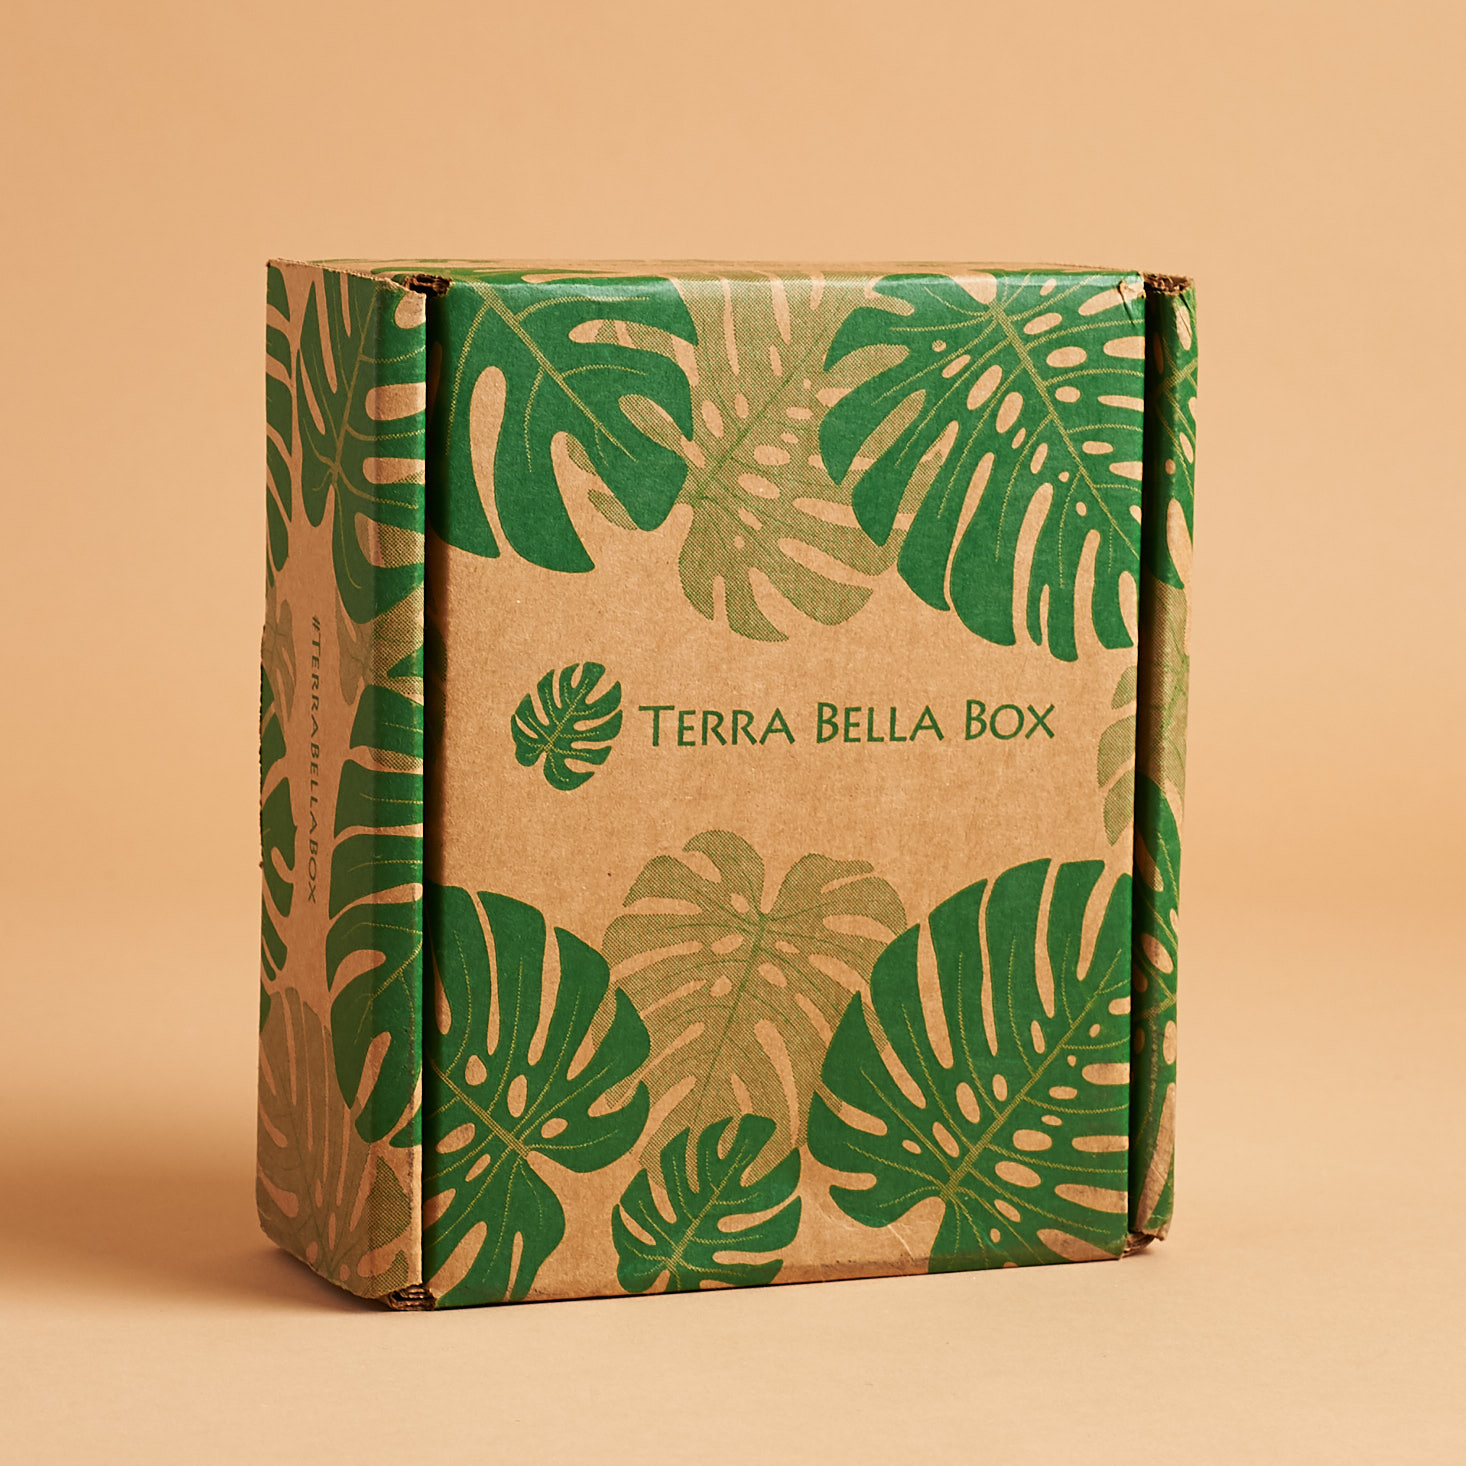 Terra Bella Box Subscription Review + Coupon – June 2018